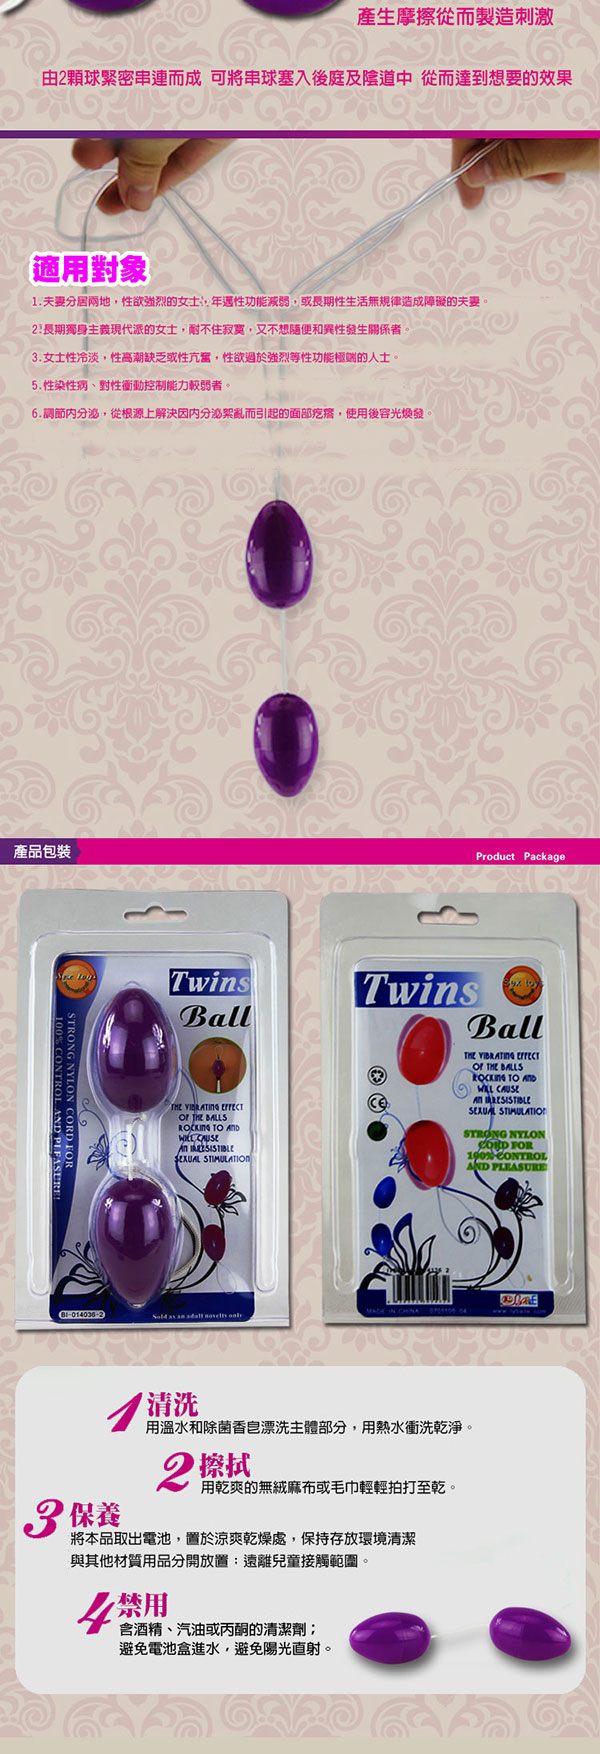 【BAILE】Twins Ball-雞蛋型雙球鍛鍊縮陰球